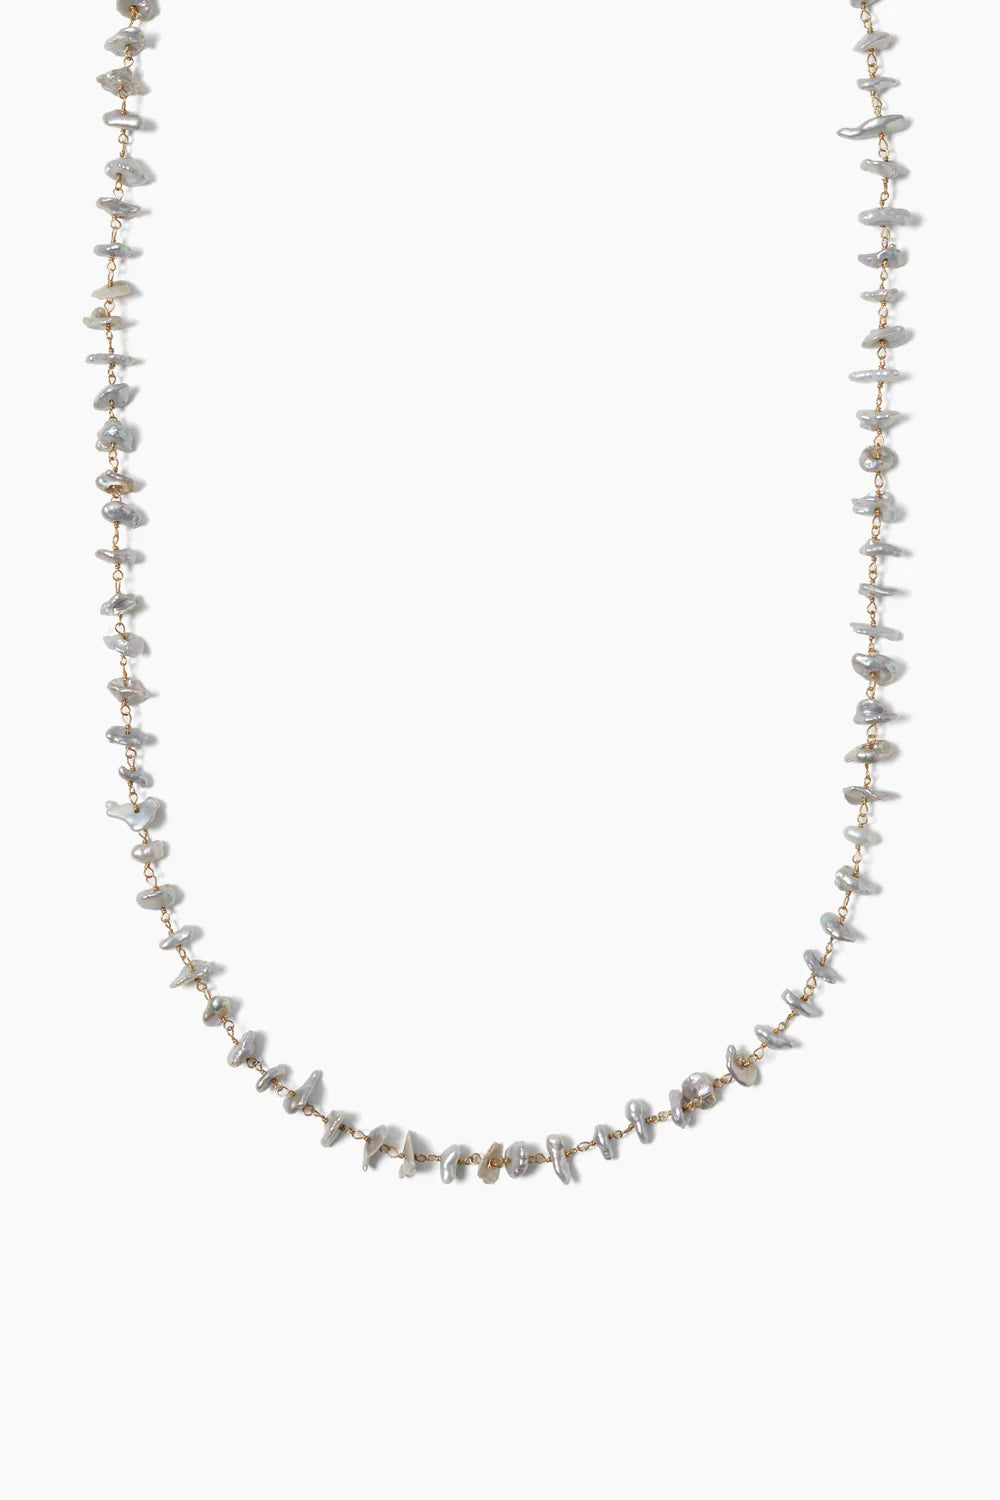 Nami Necklace in Grey Pearl